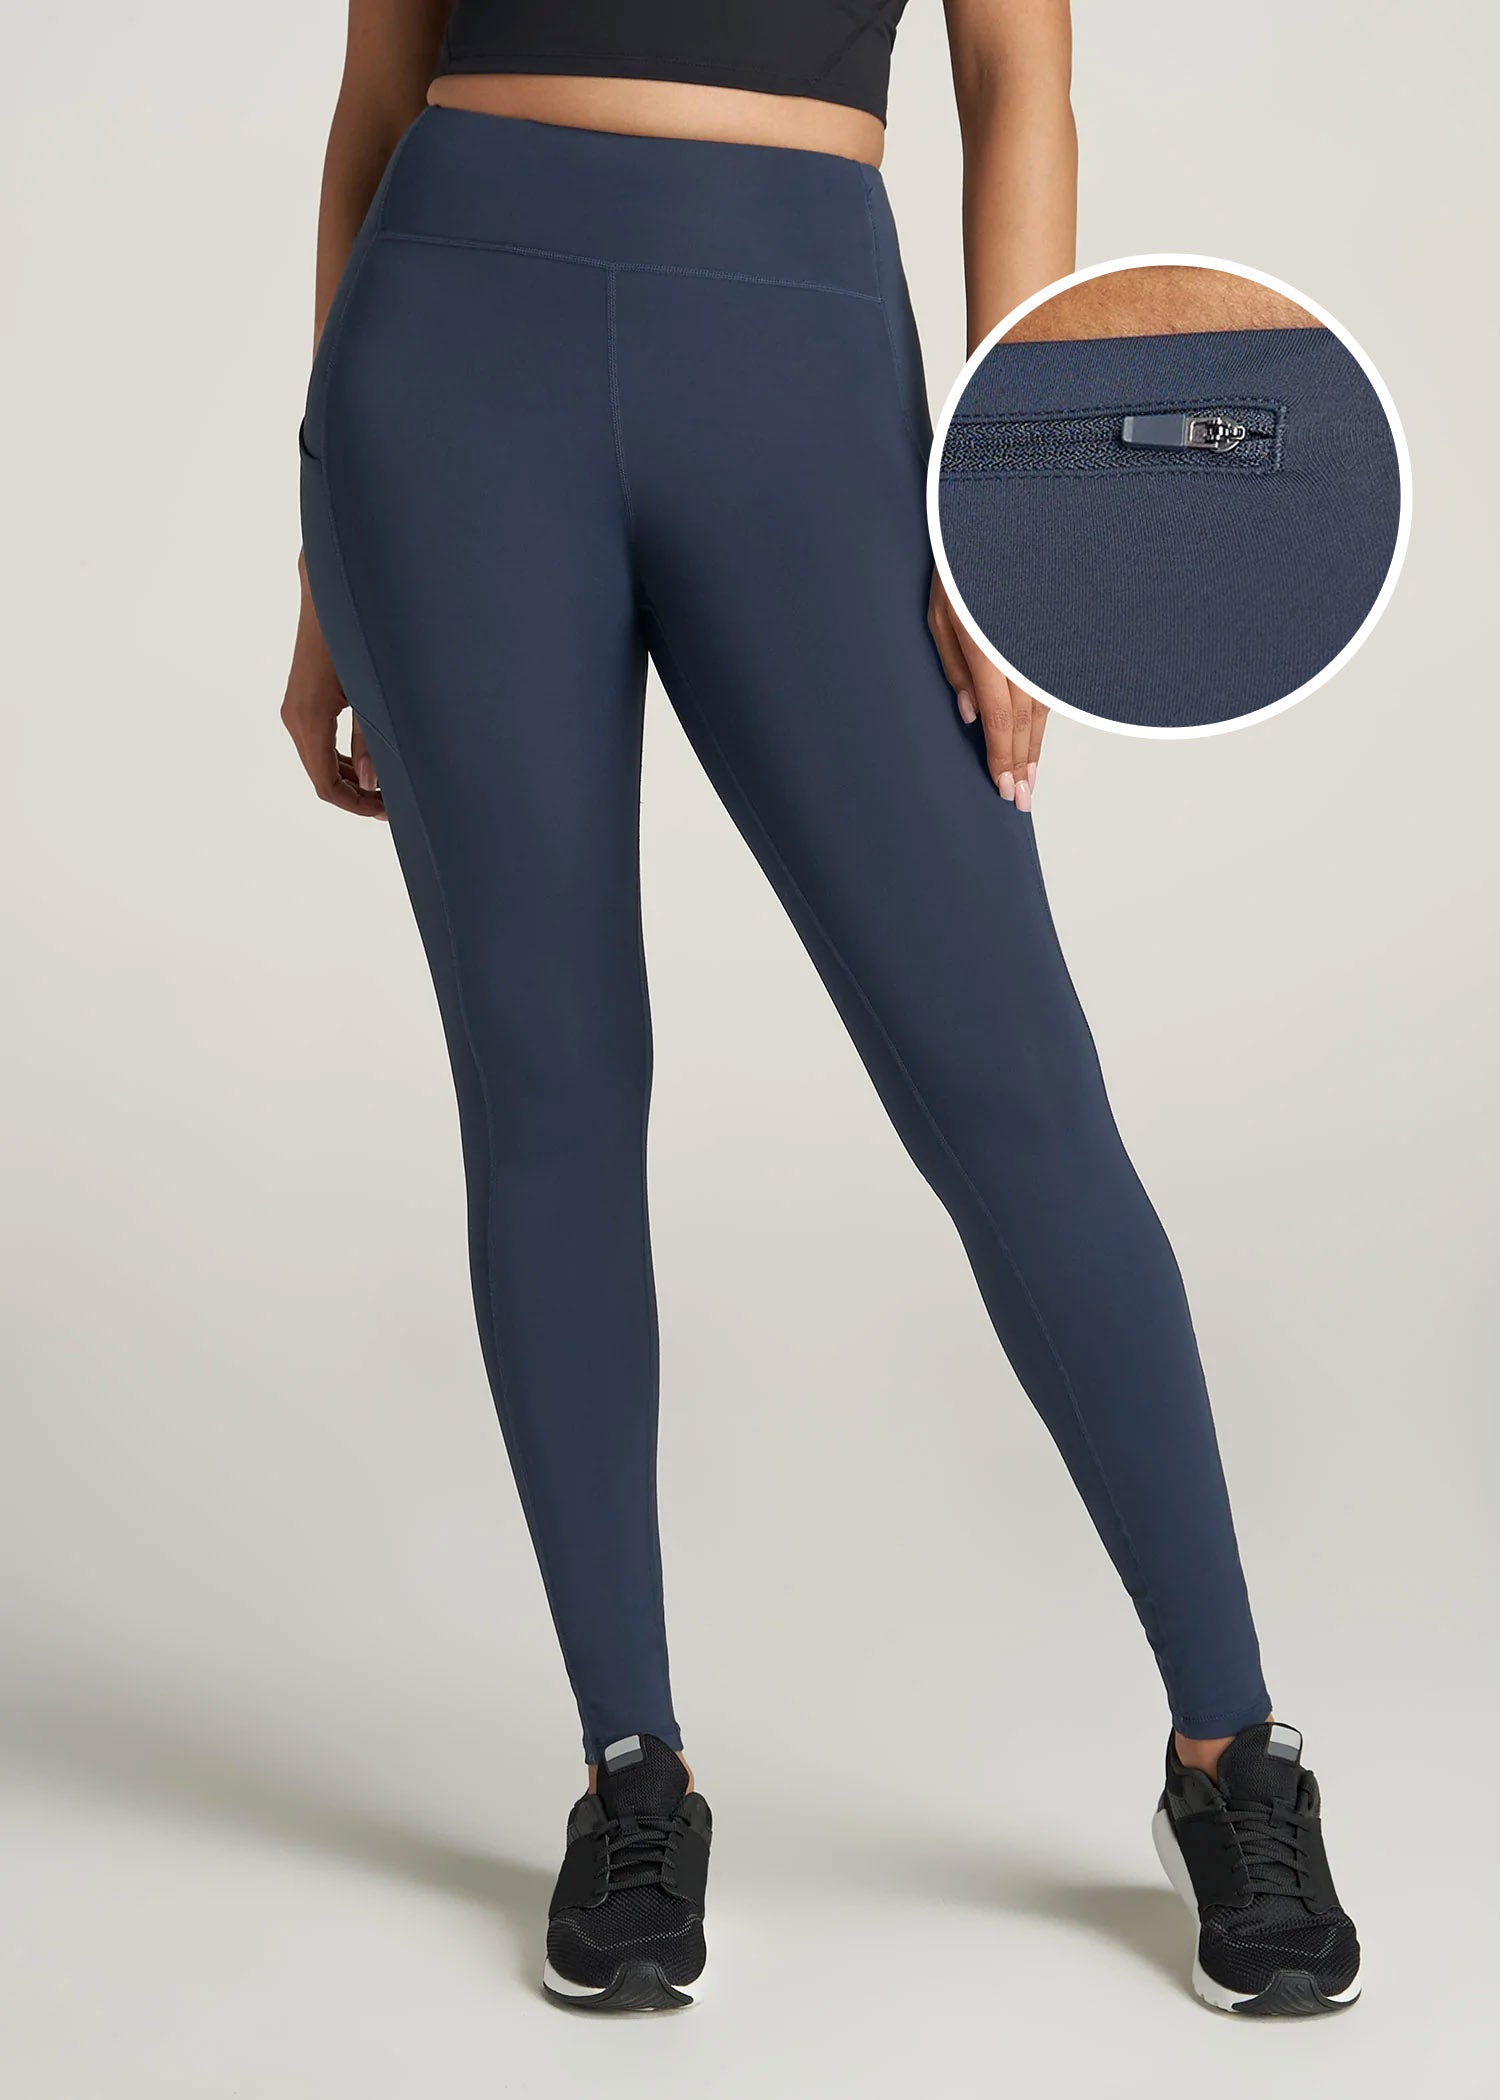 Women's Sexy Semi See-through Slim Fit Pants Elastic Sports Yoga Pants  Leggings